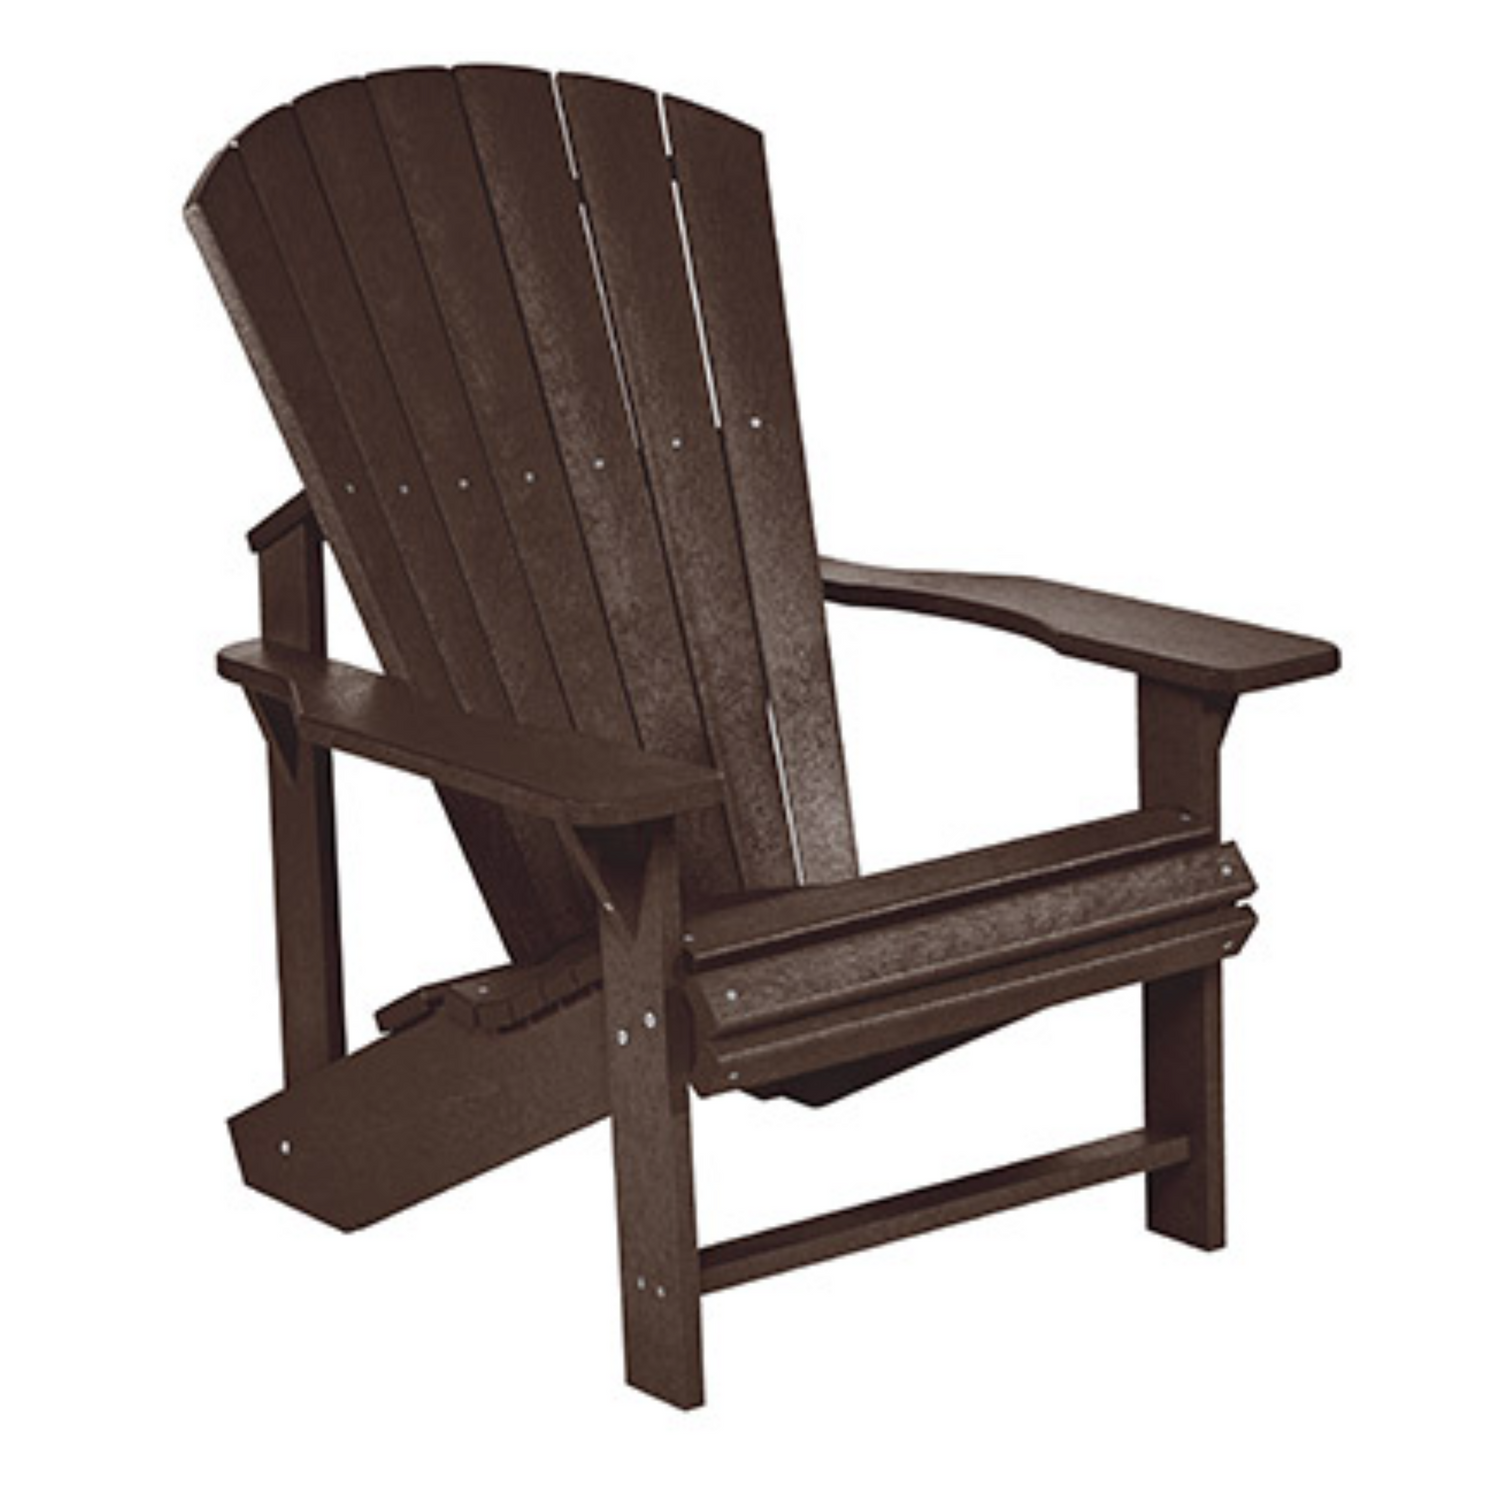 C.R.P. Upright Adirondack Chair In Chocolate